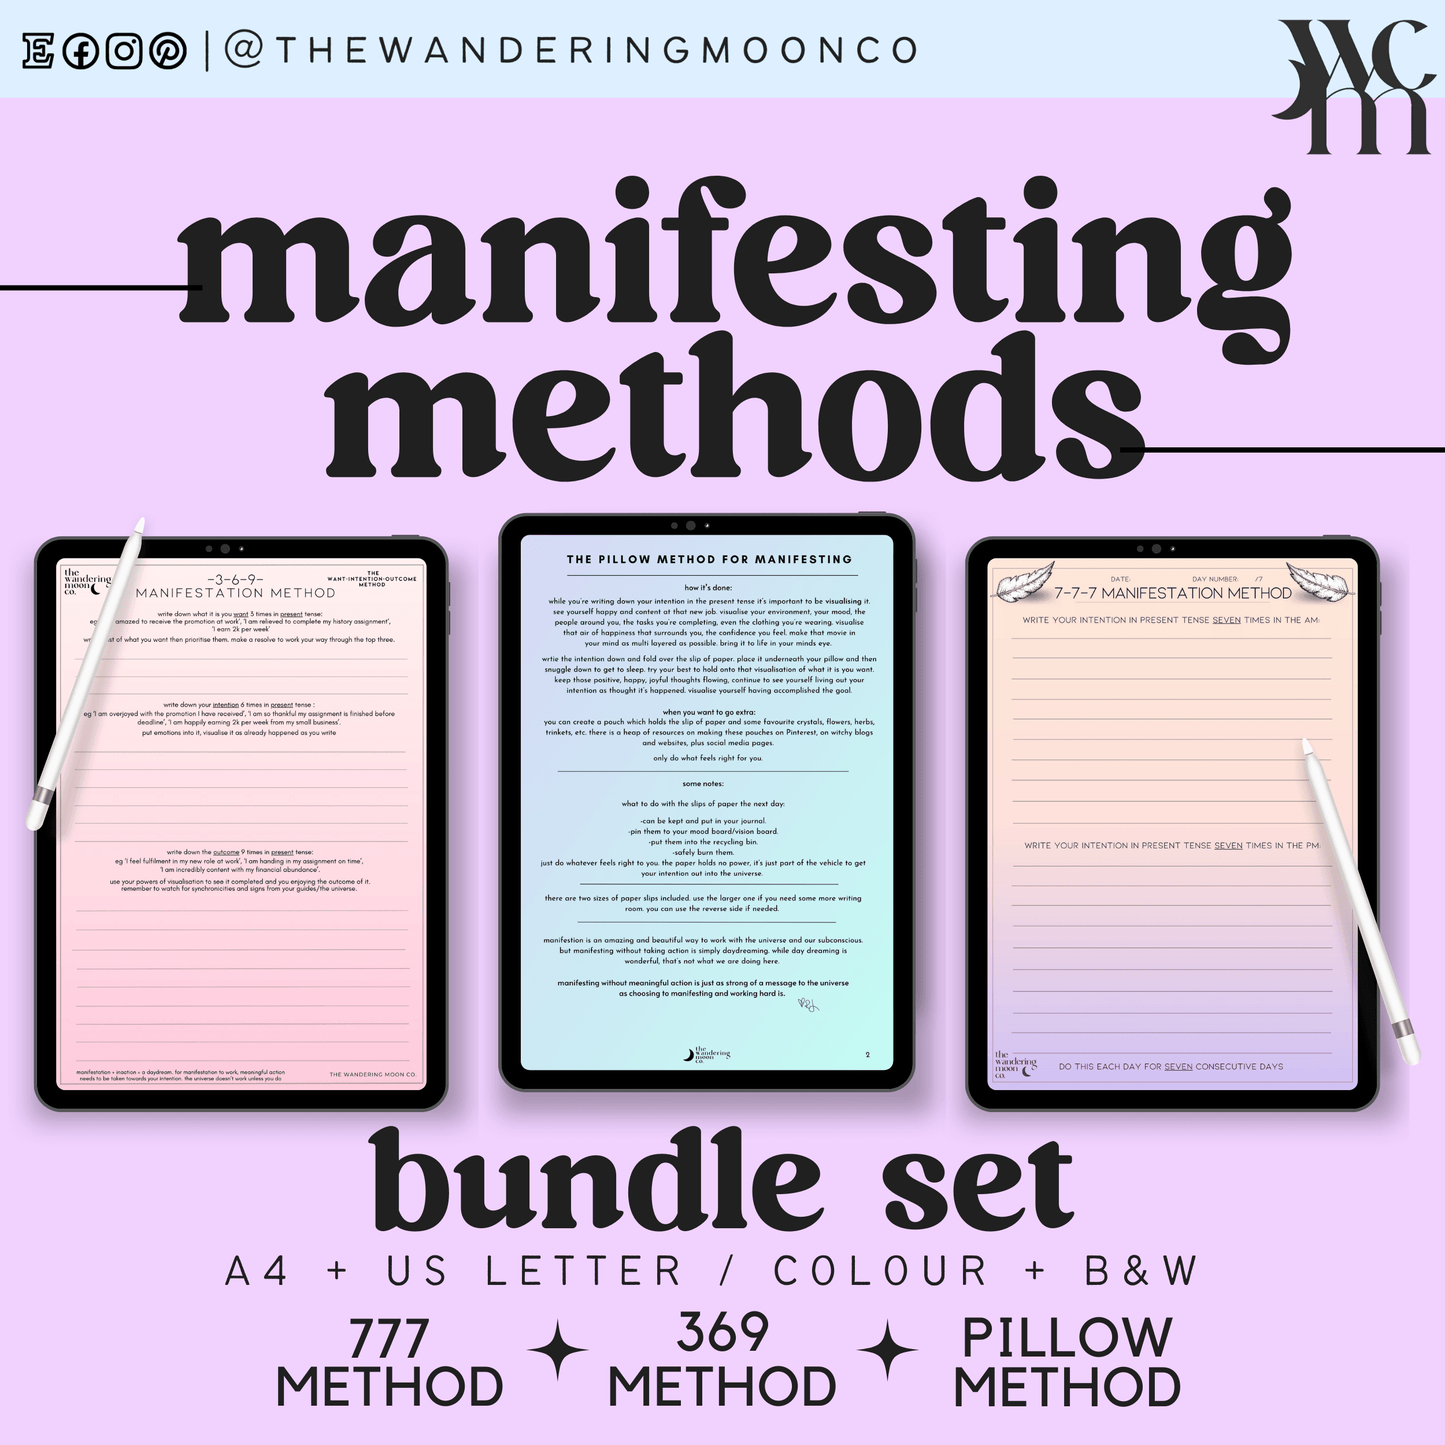 manifesting methods set: 369, 777, pillow method journal - The Wandering Moon Co.